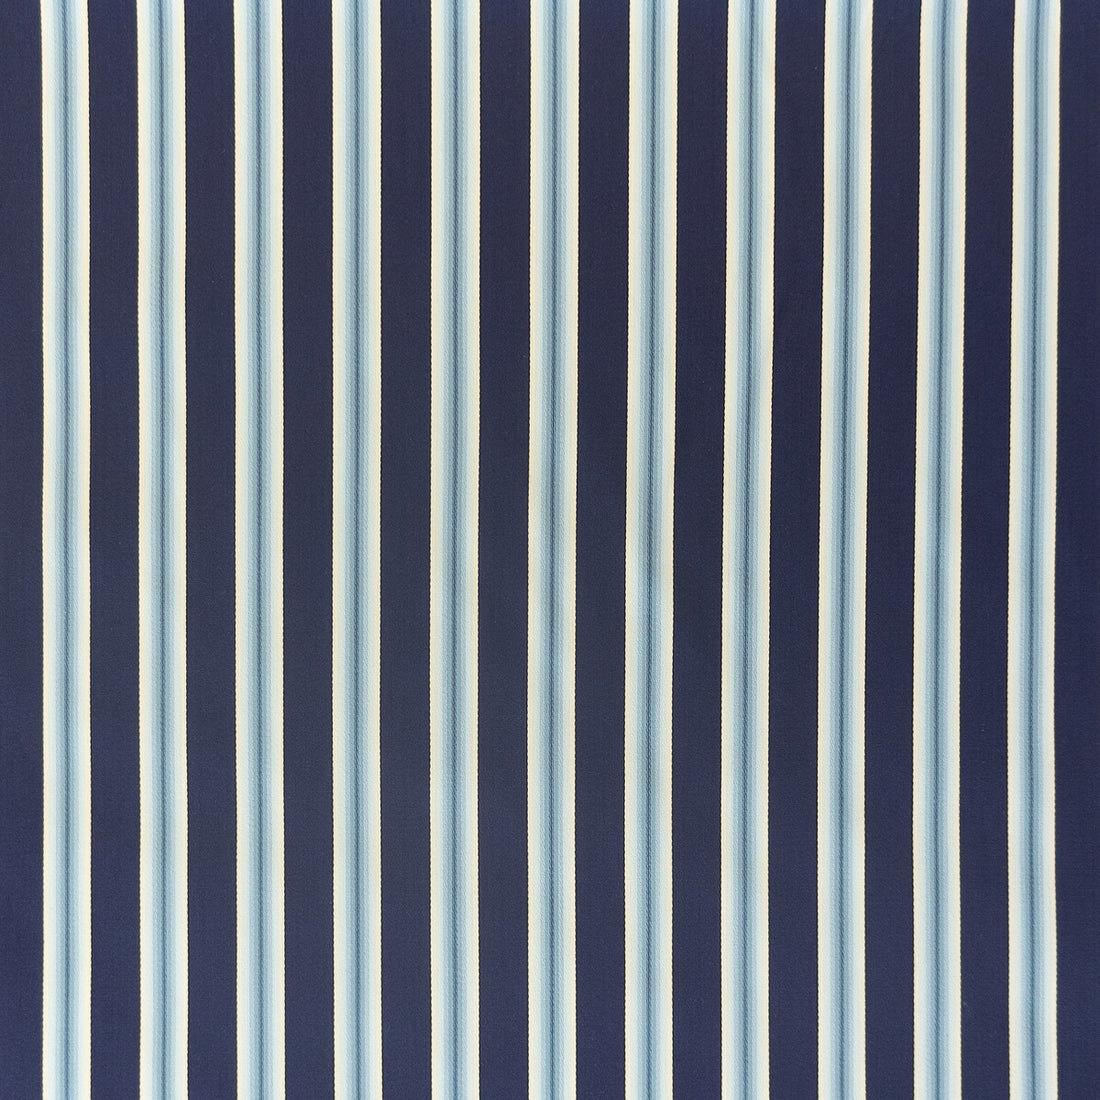 Trastamara fabric in azul color - pattern LCT1024.004.0 - by Gaston y Daniela in the Lorenzo Castillo V collection